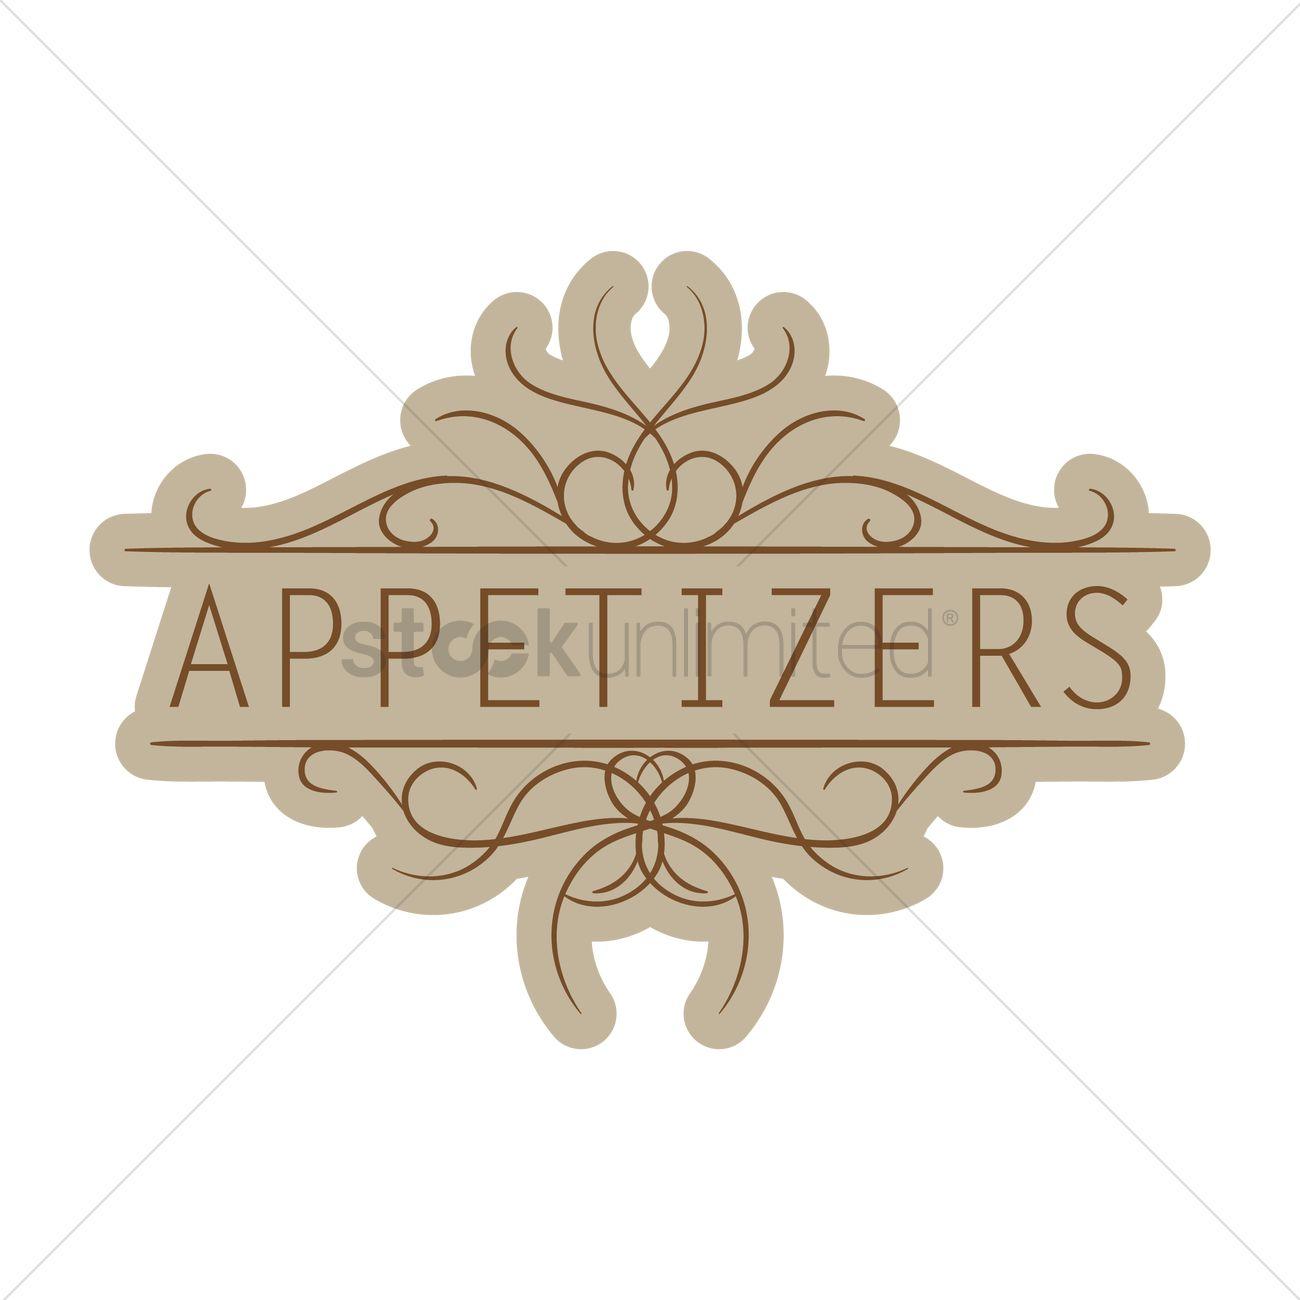 Appetizer Logo - Appetizers menu title Vector Image - 1859557 | StockUnlimited